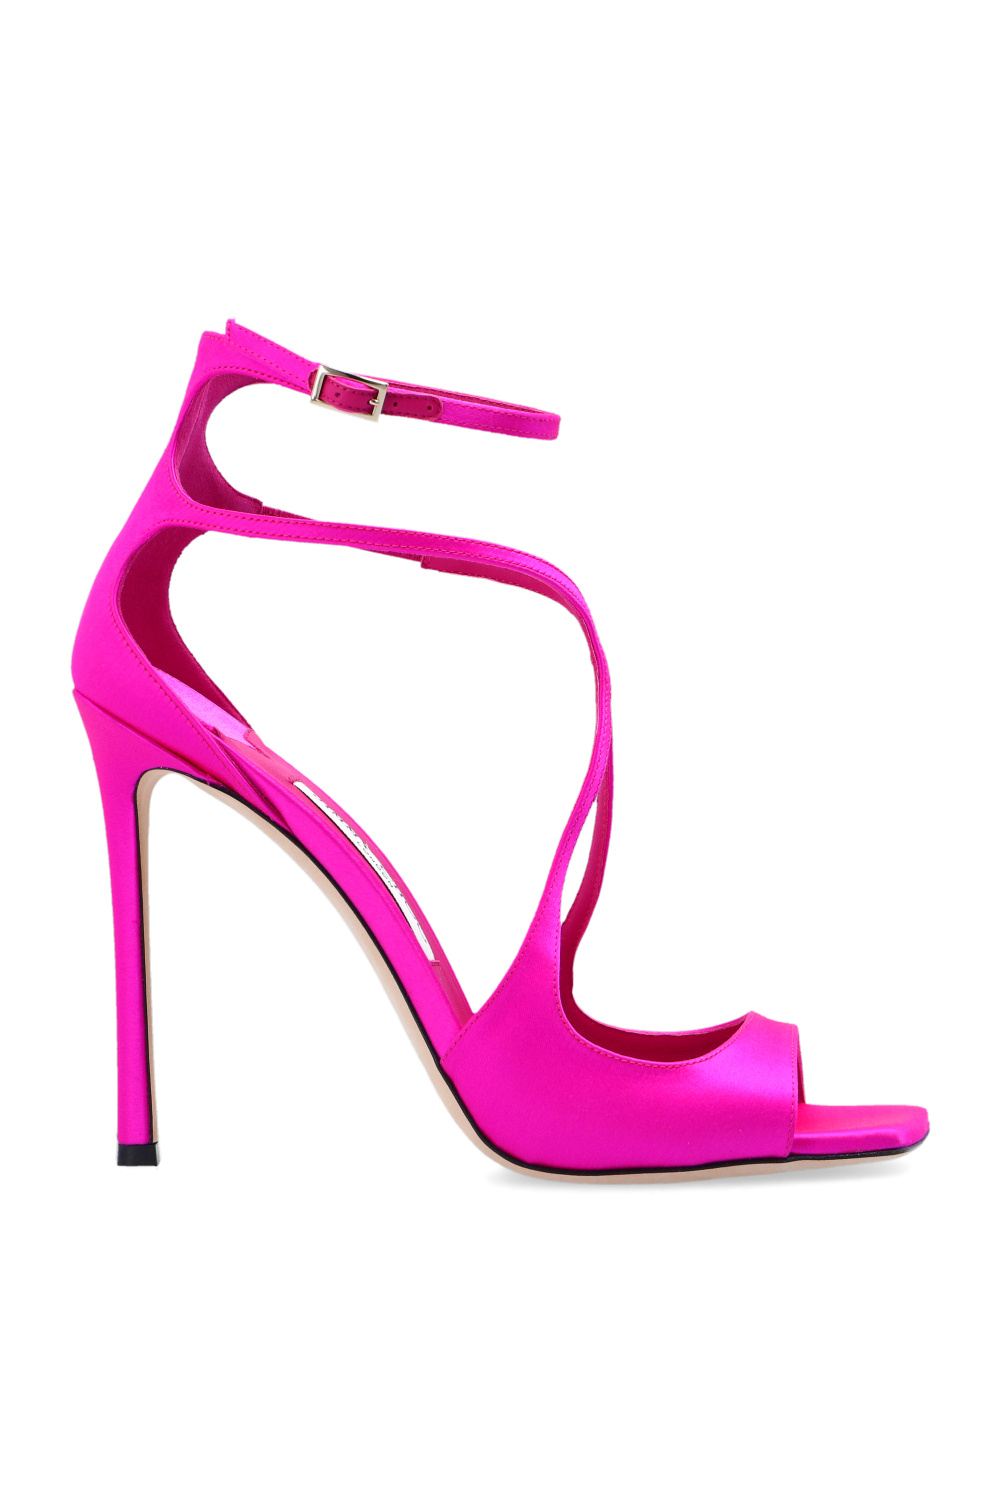 ‘Azia’ heeled sandals Jimmy Choo - Vitkac Spain